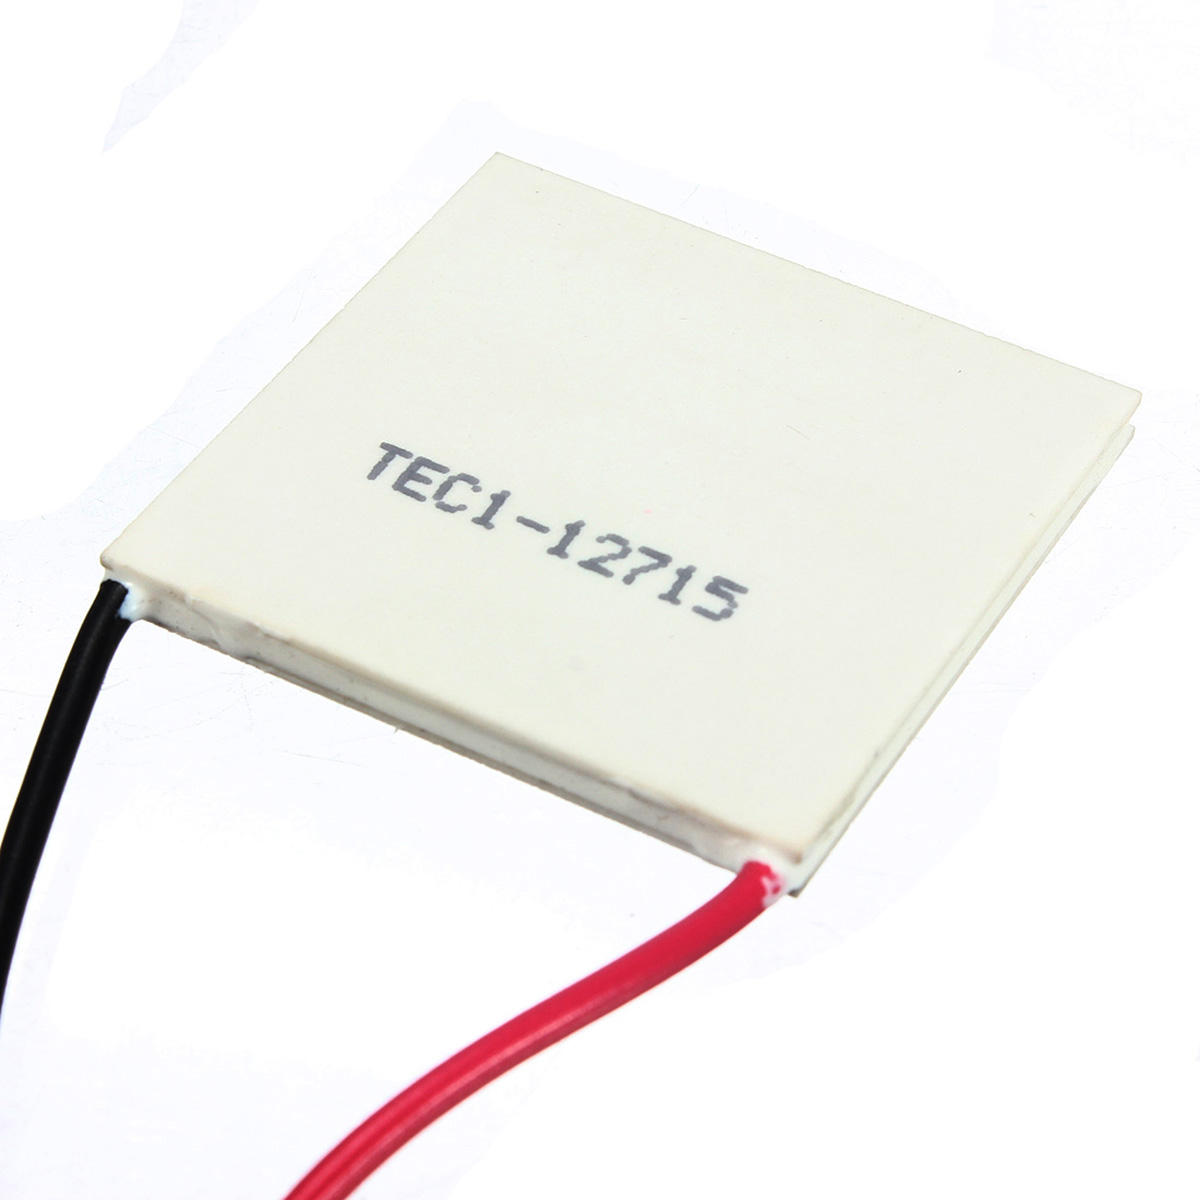 

3pcs TEC1-12715 12V Heat Sink Thermoelectric Cooler Peltier Plate Module